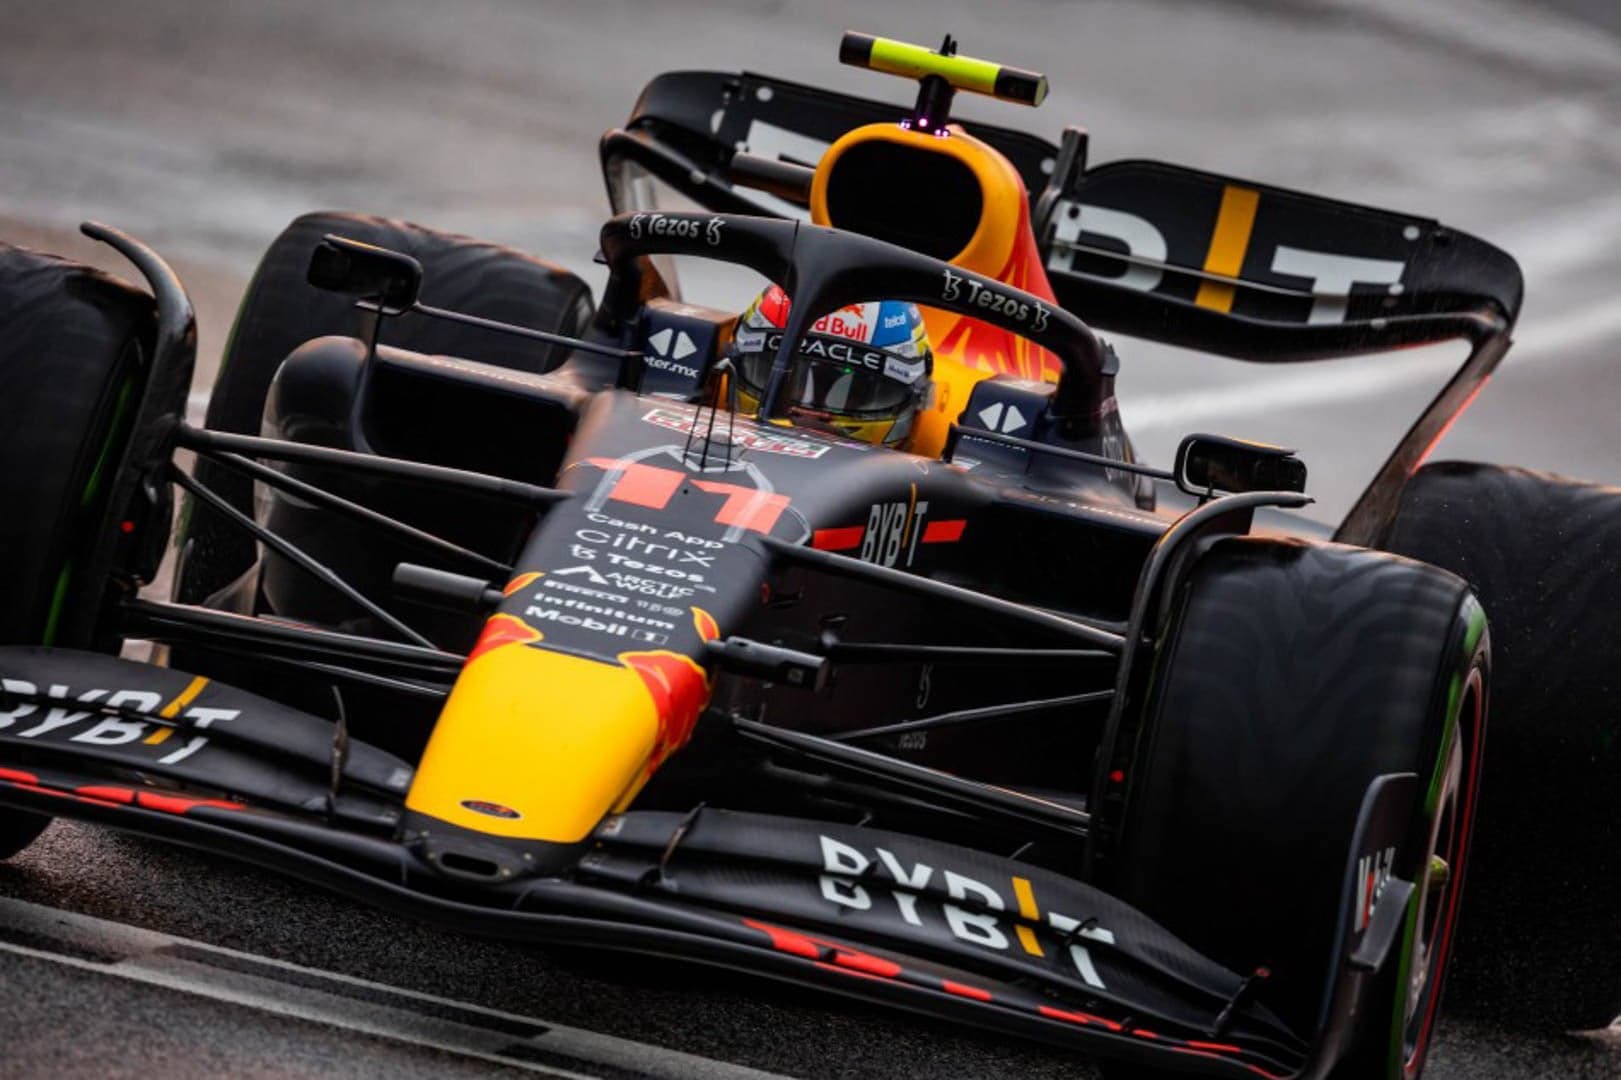 Emilia Romagna Grand Prix: Red Bull Takes 1-2 Finish, Car Troubles Plague Hamilton